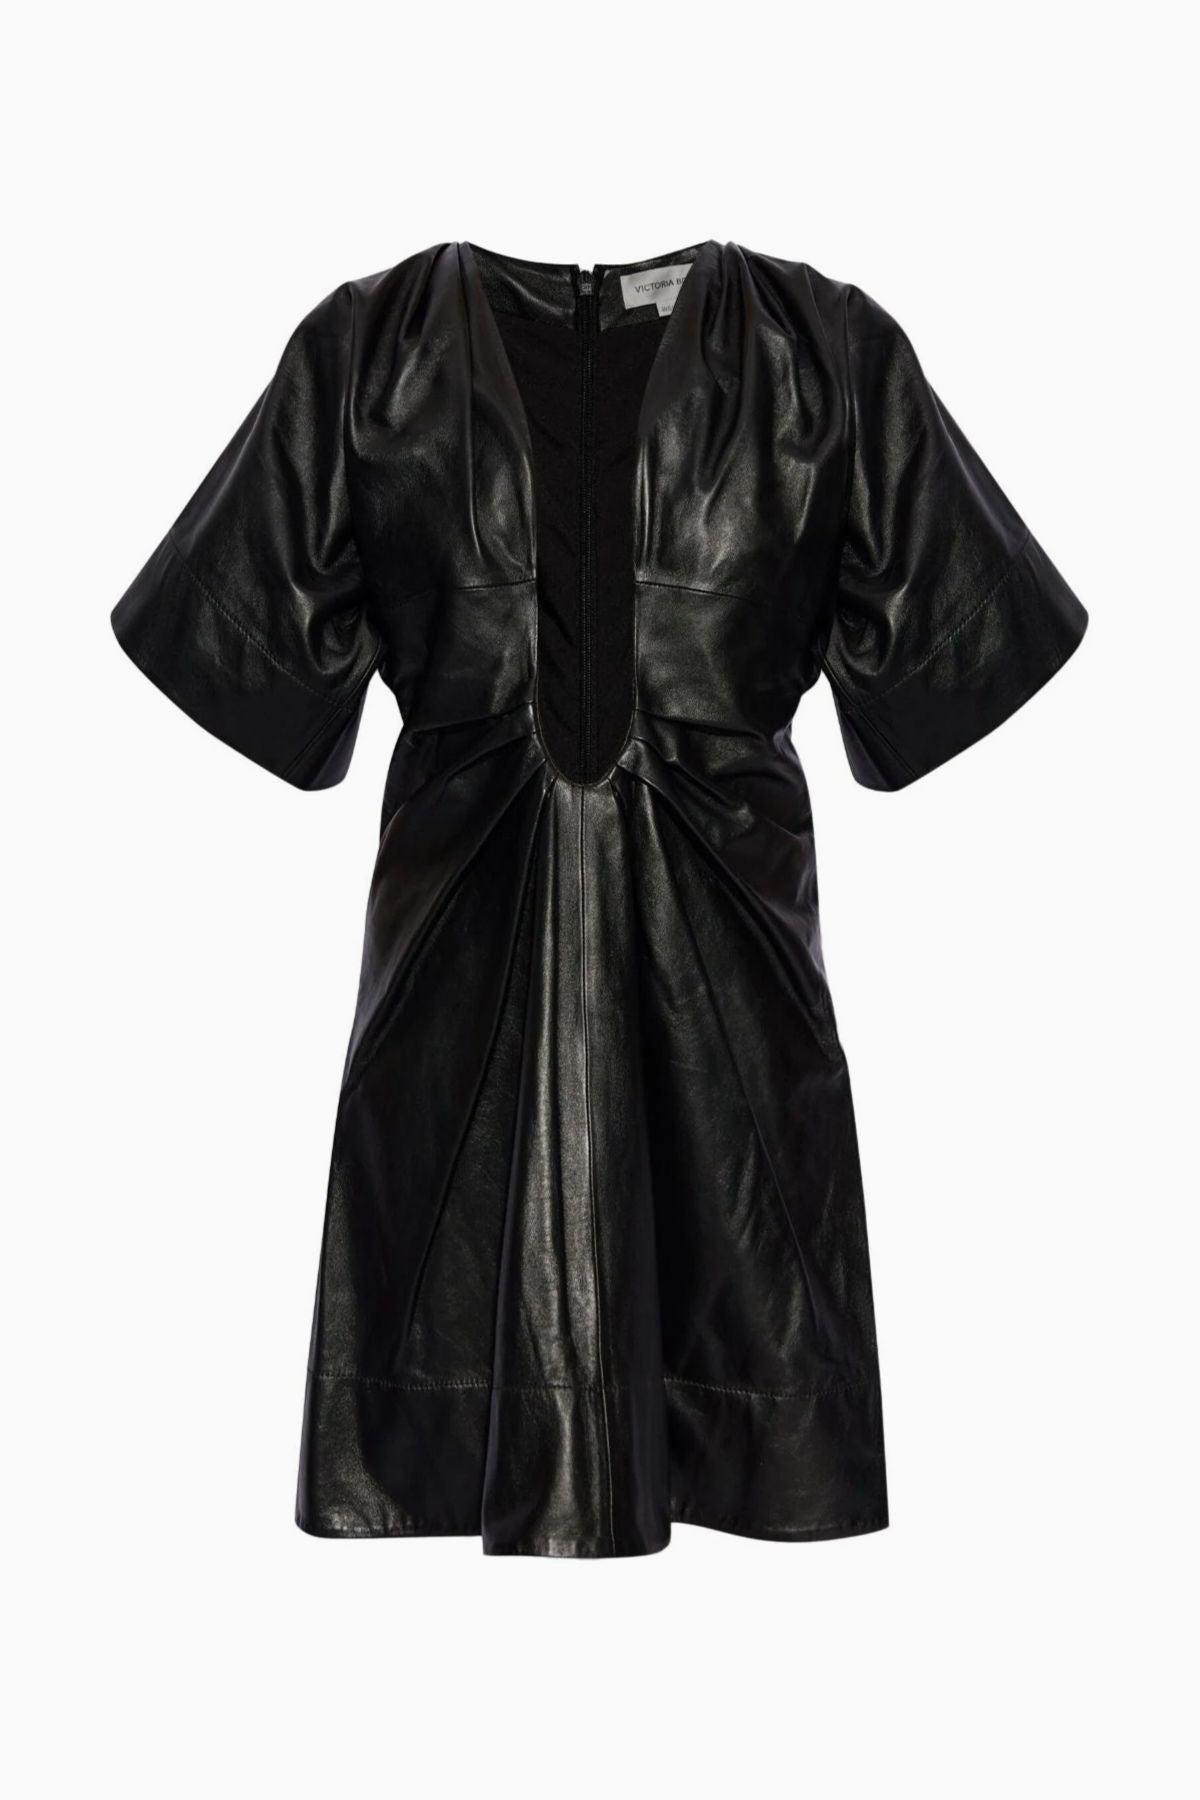 Victoria Beckham Structured Leather T-Shirt Dress - Black